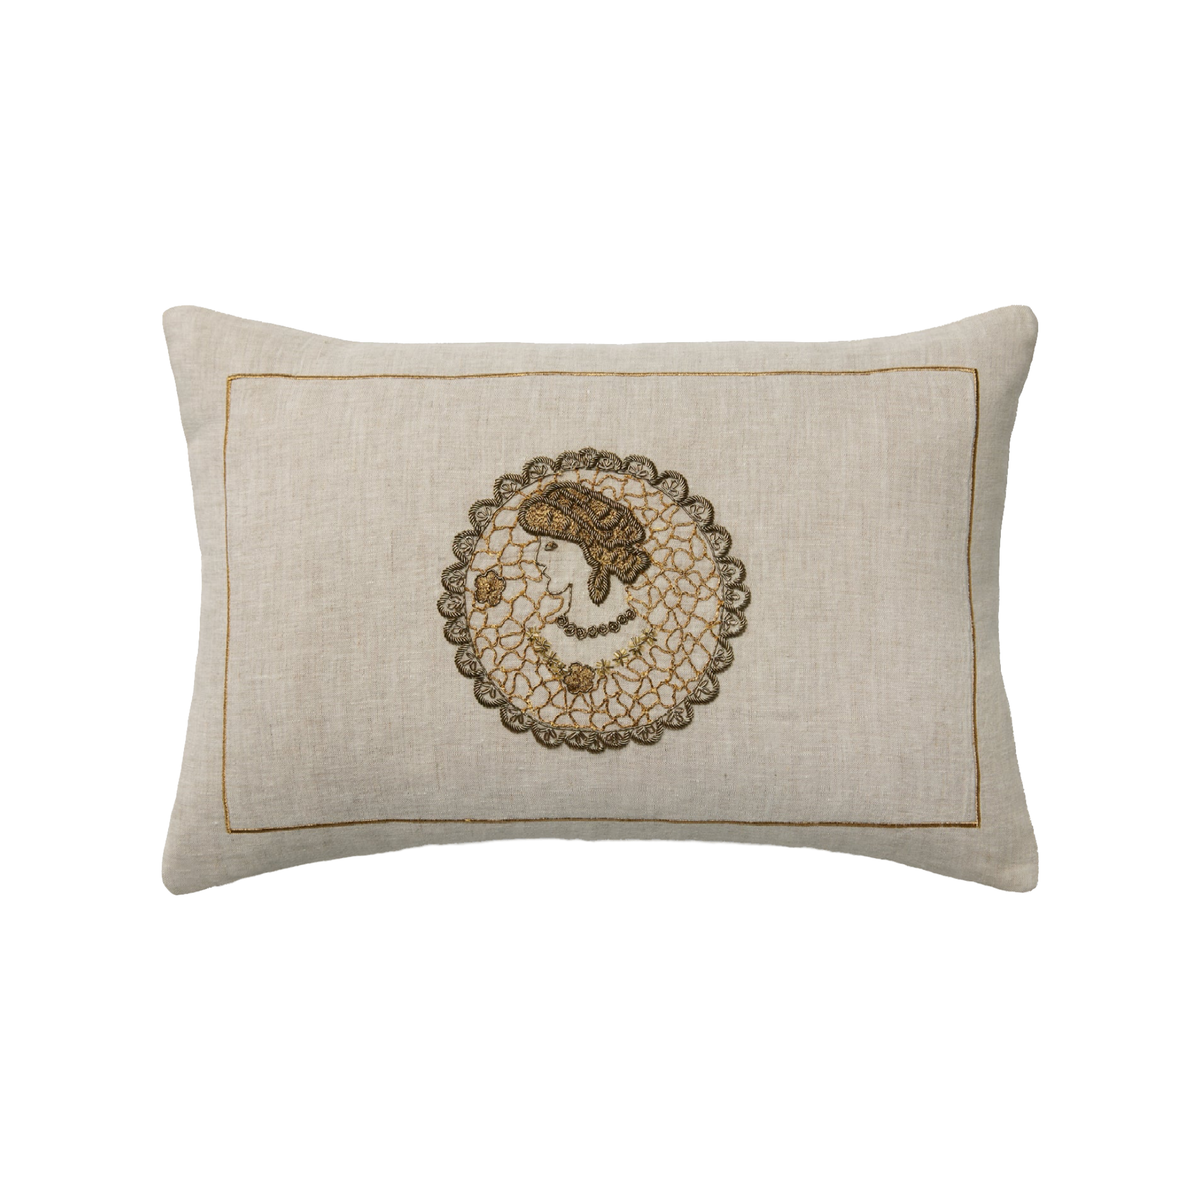 Sferra Cameo Decorative Pillow in Natural/Gold Color